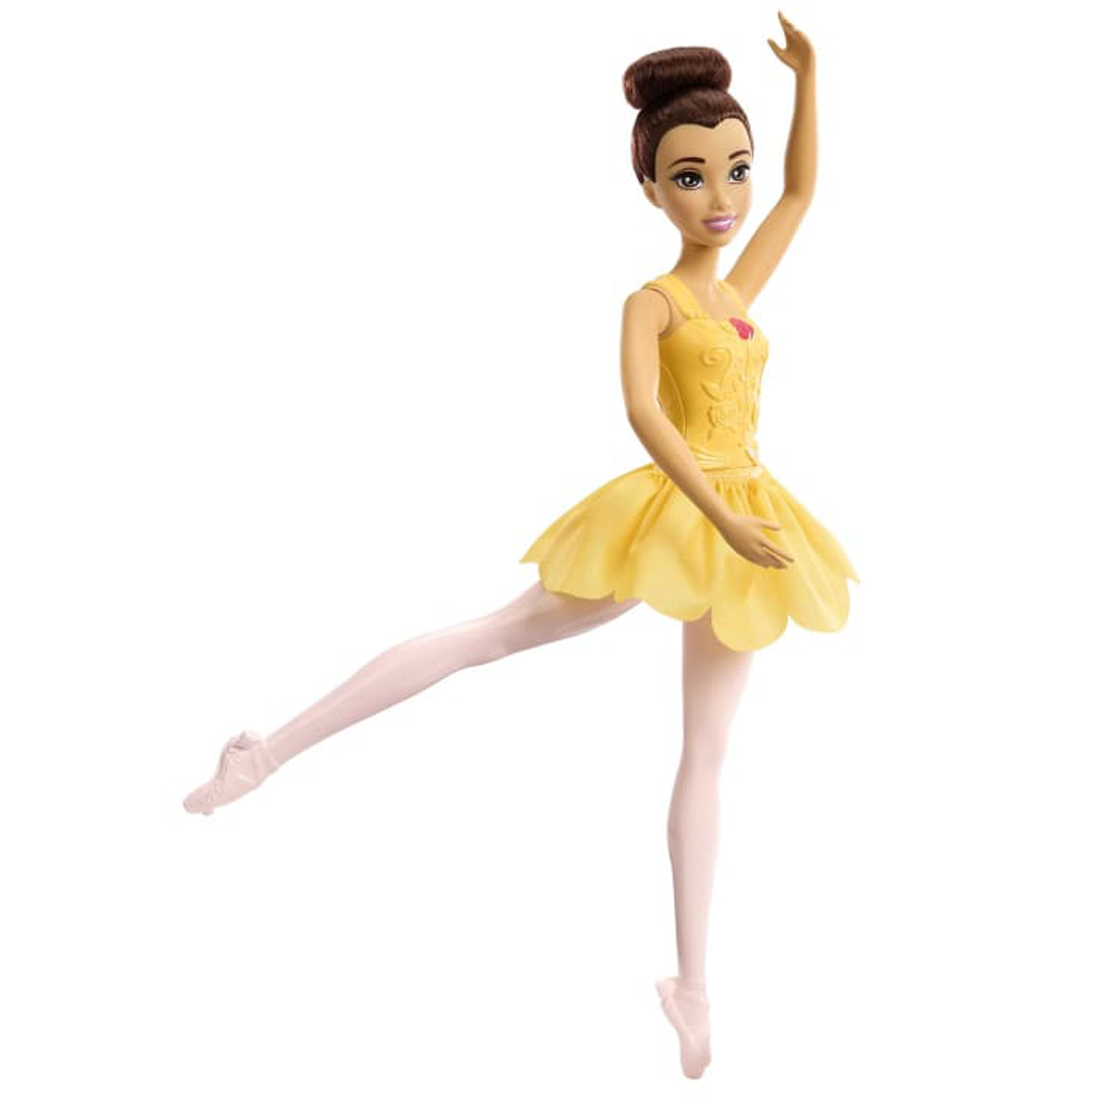 The Disney Princess Belle Ballerina Package